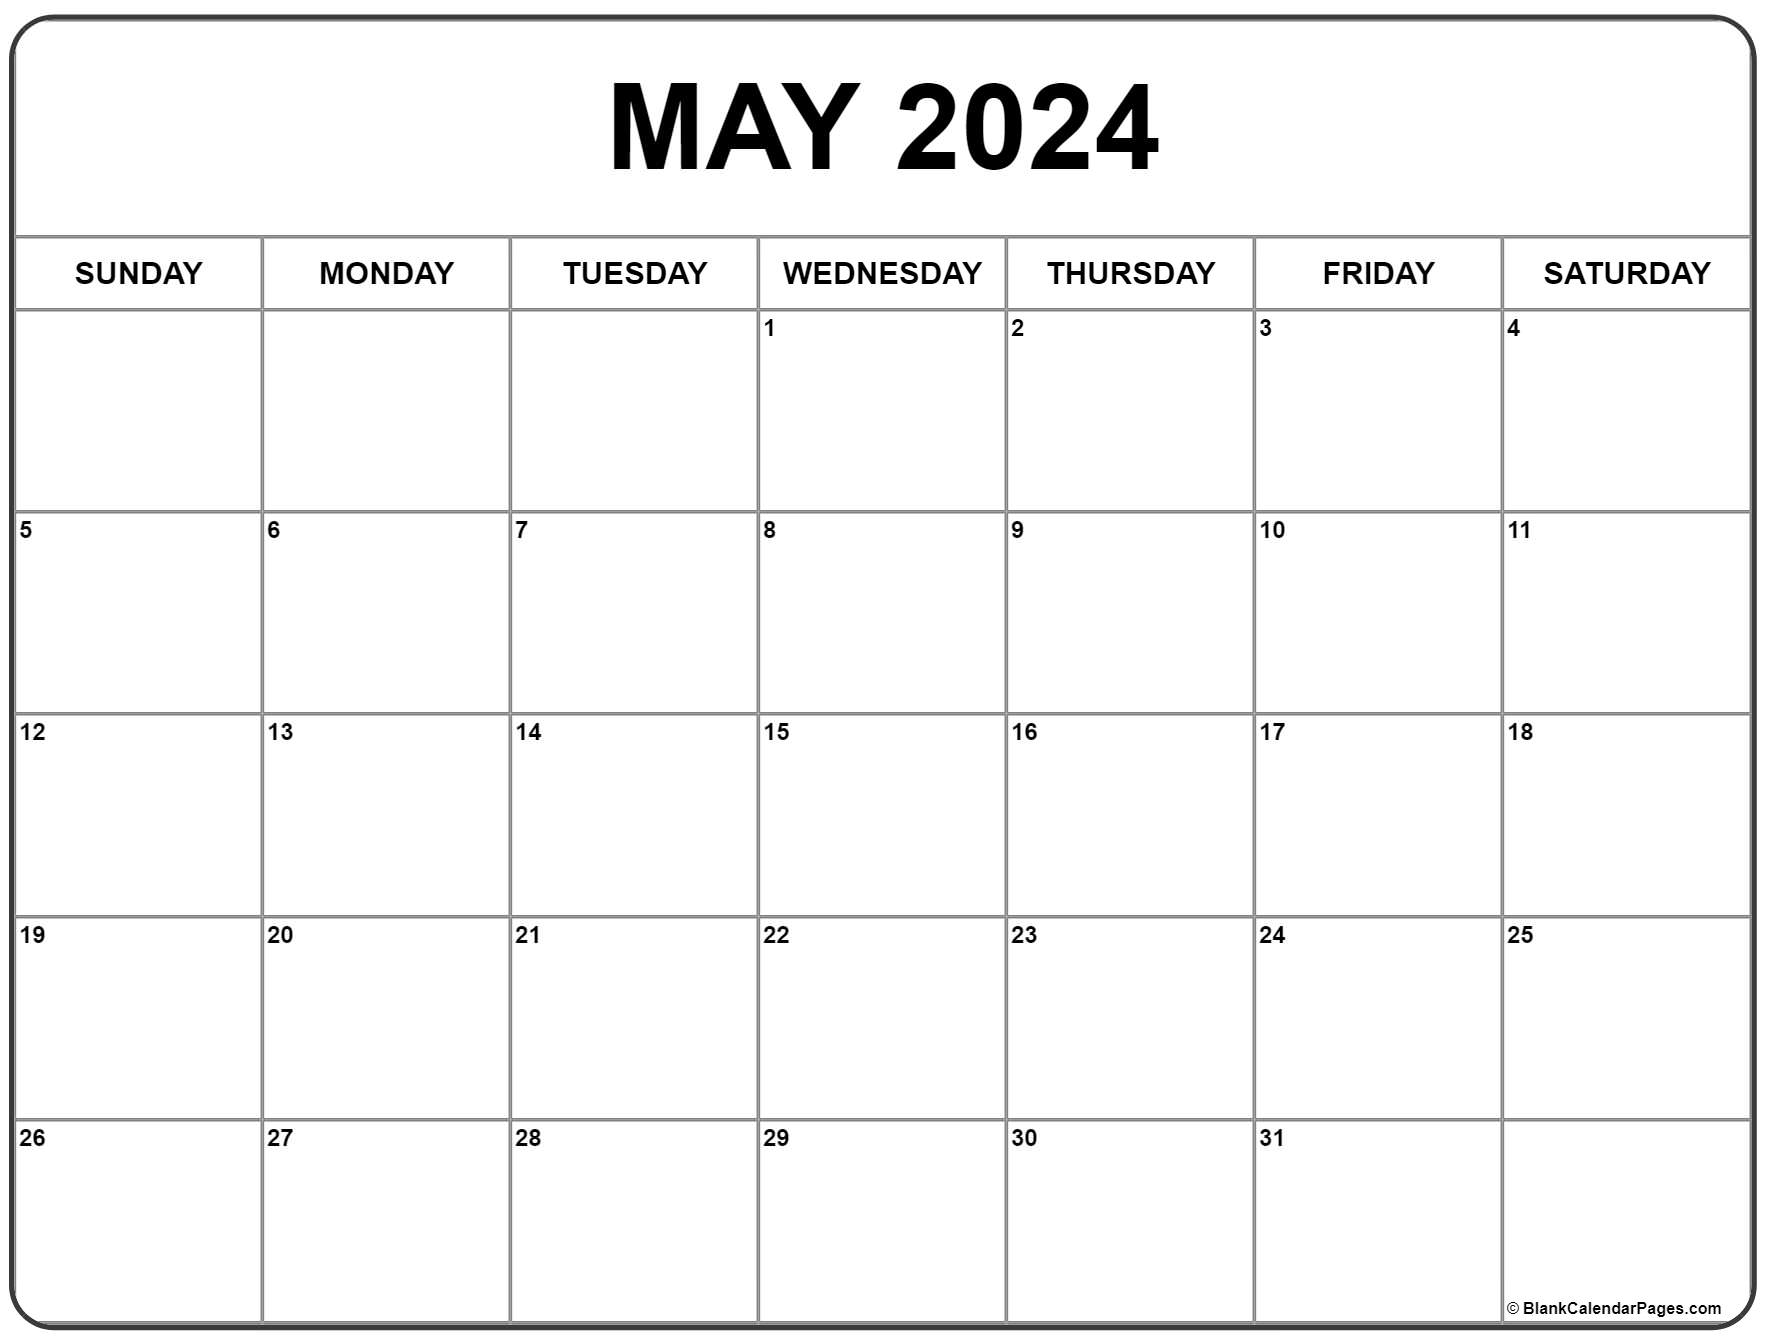 May 2024 Calendar | Free Printable Calendar for May 2024 Calendar Printable Free